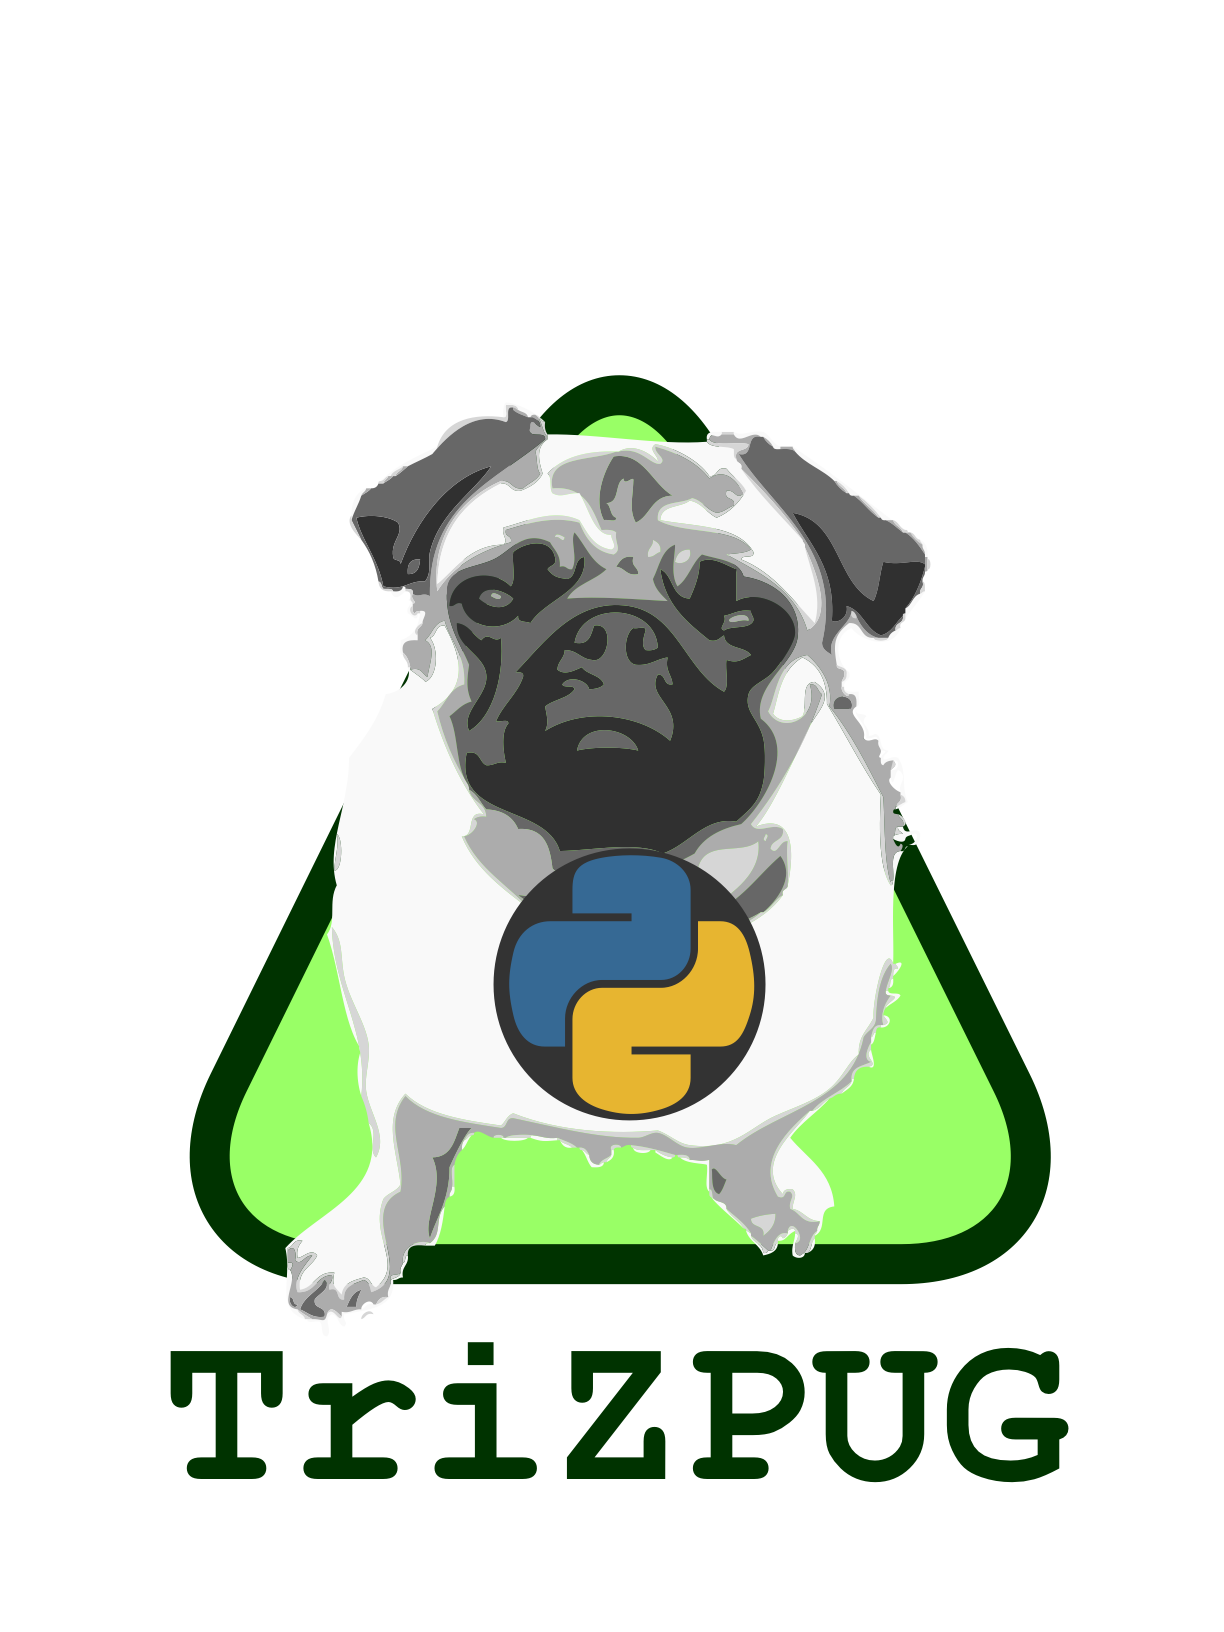 trizpug-logo.png